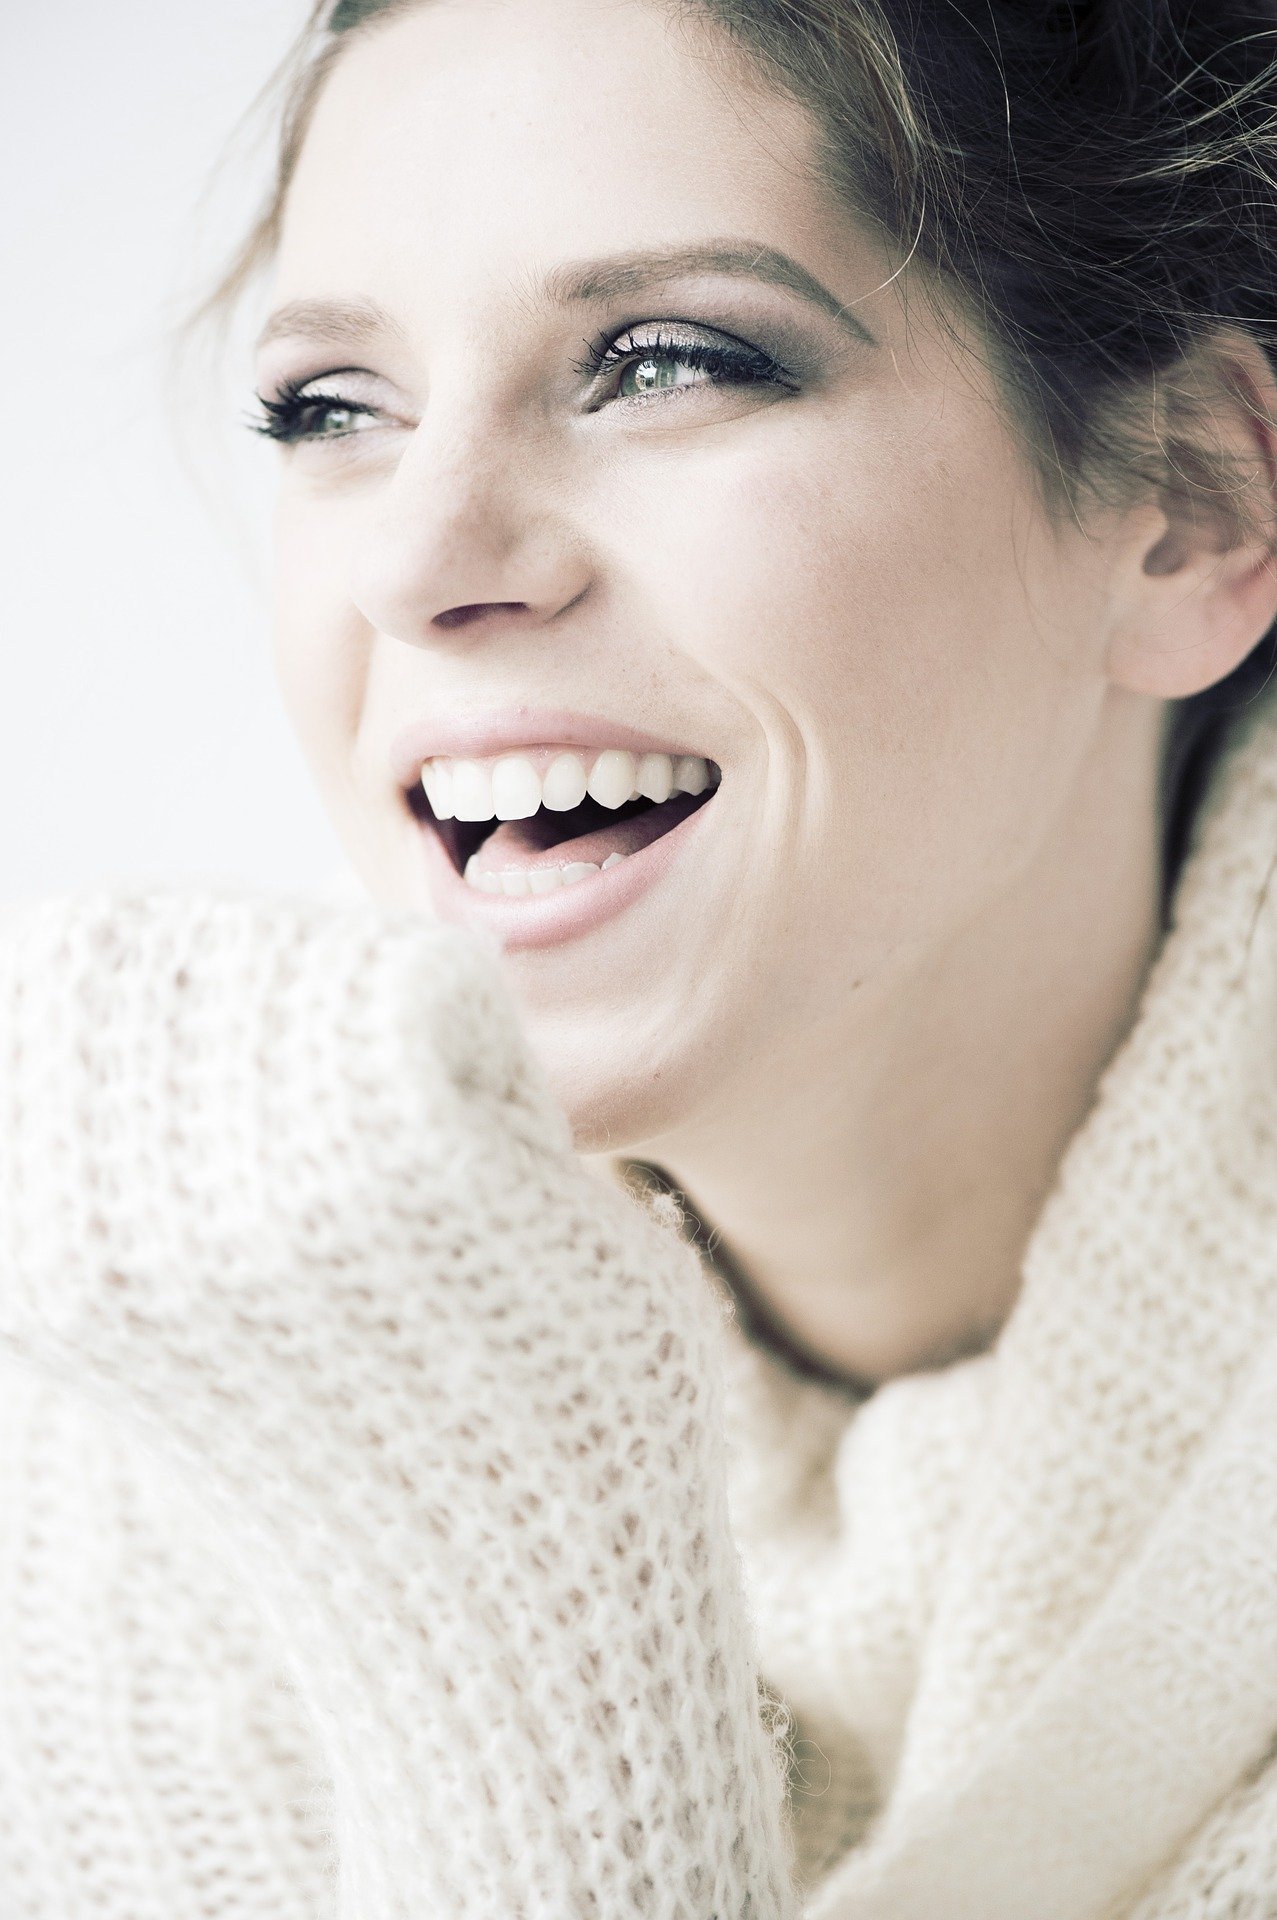 Mujer riendo. Fuente: Pixabay